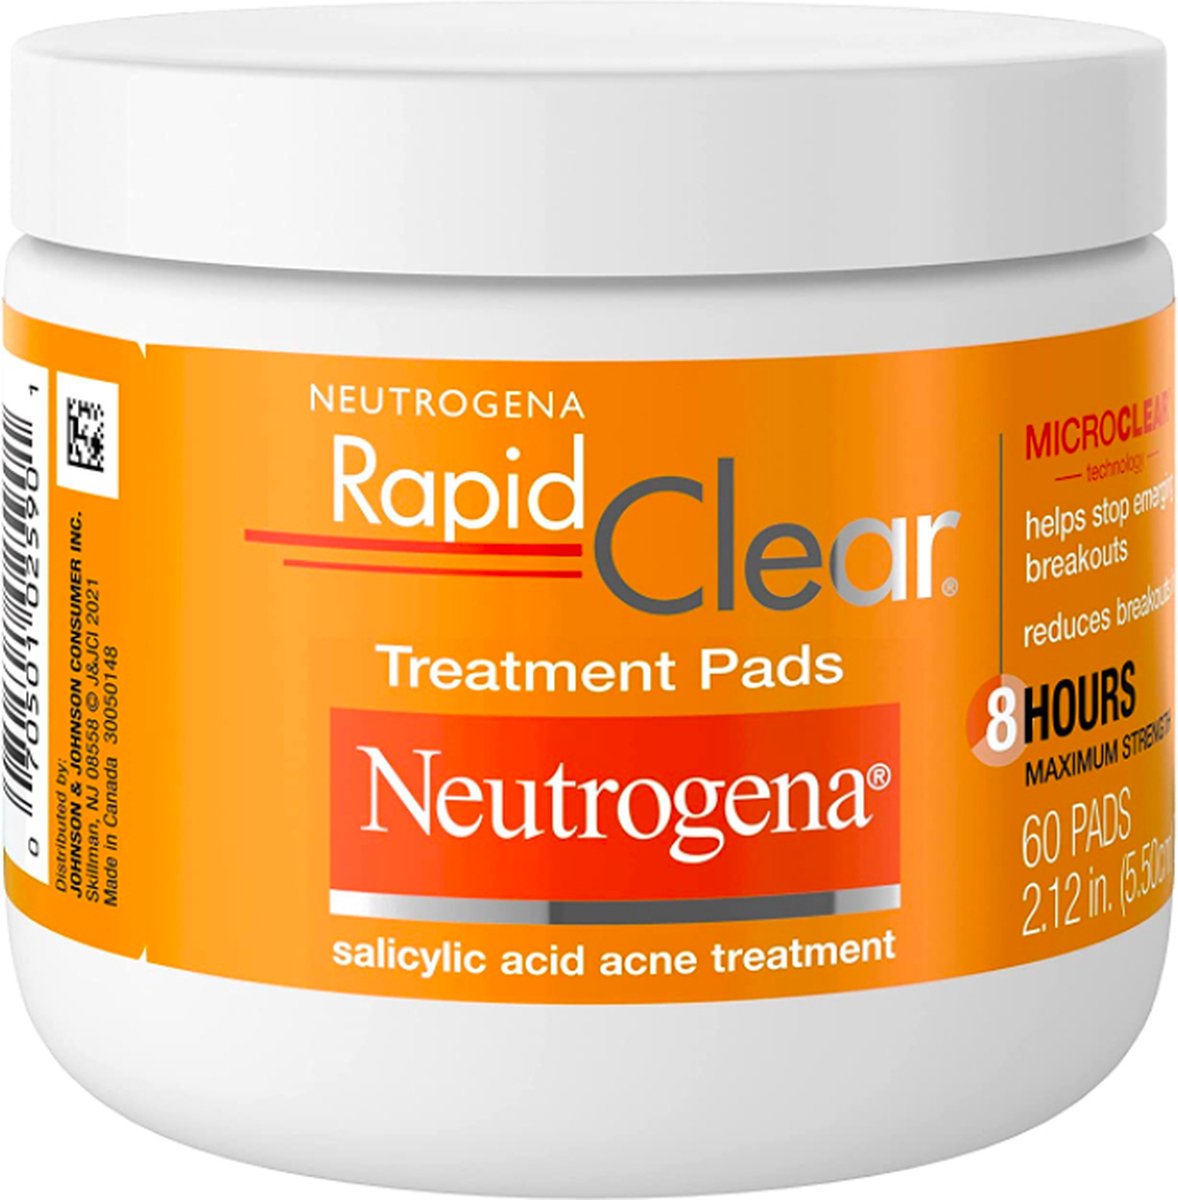 Neutrogena Rapid Clear Face Pads